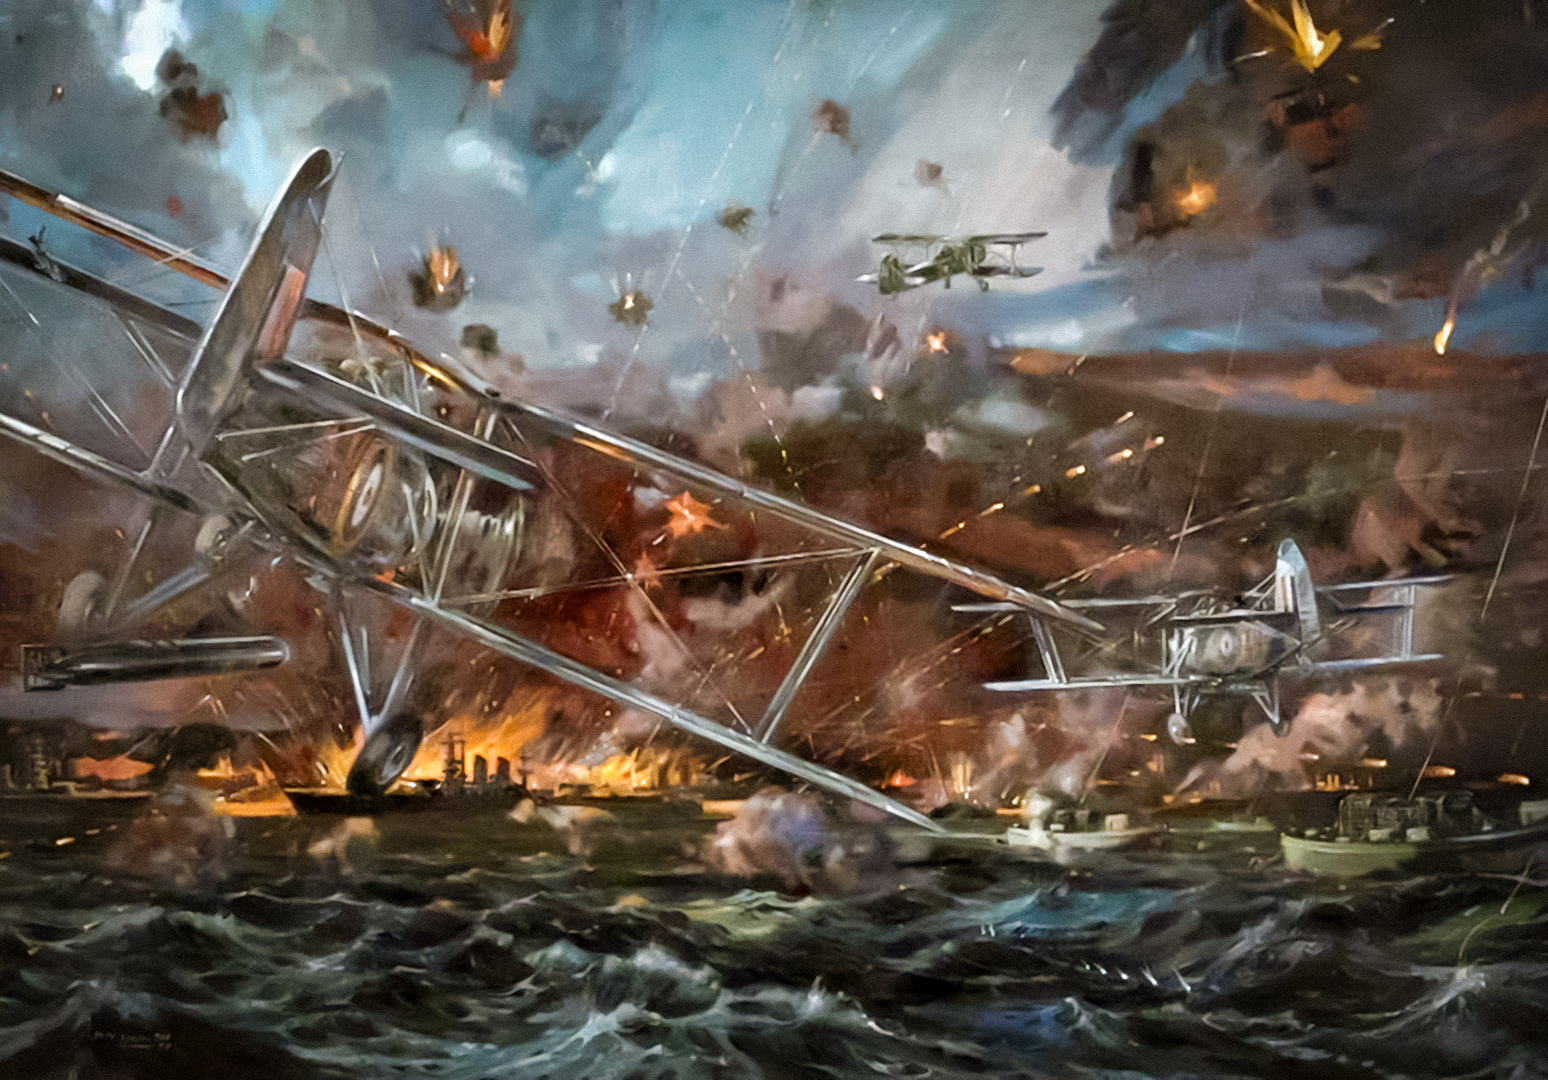 Какой корабль атаковали. Атака на Таранто 1940. Атака Таранто 12 ноября 1940 год. Атака на Таранто. Налет на Таранто 1940.